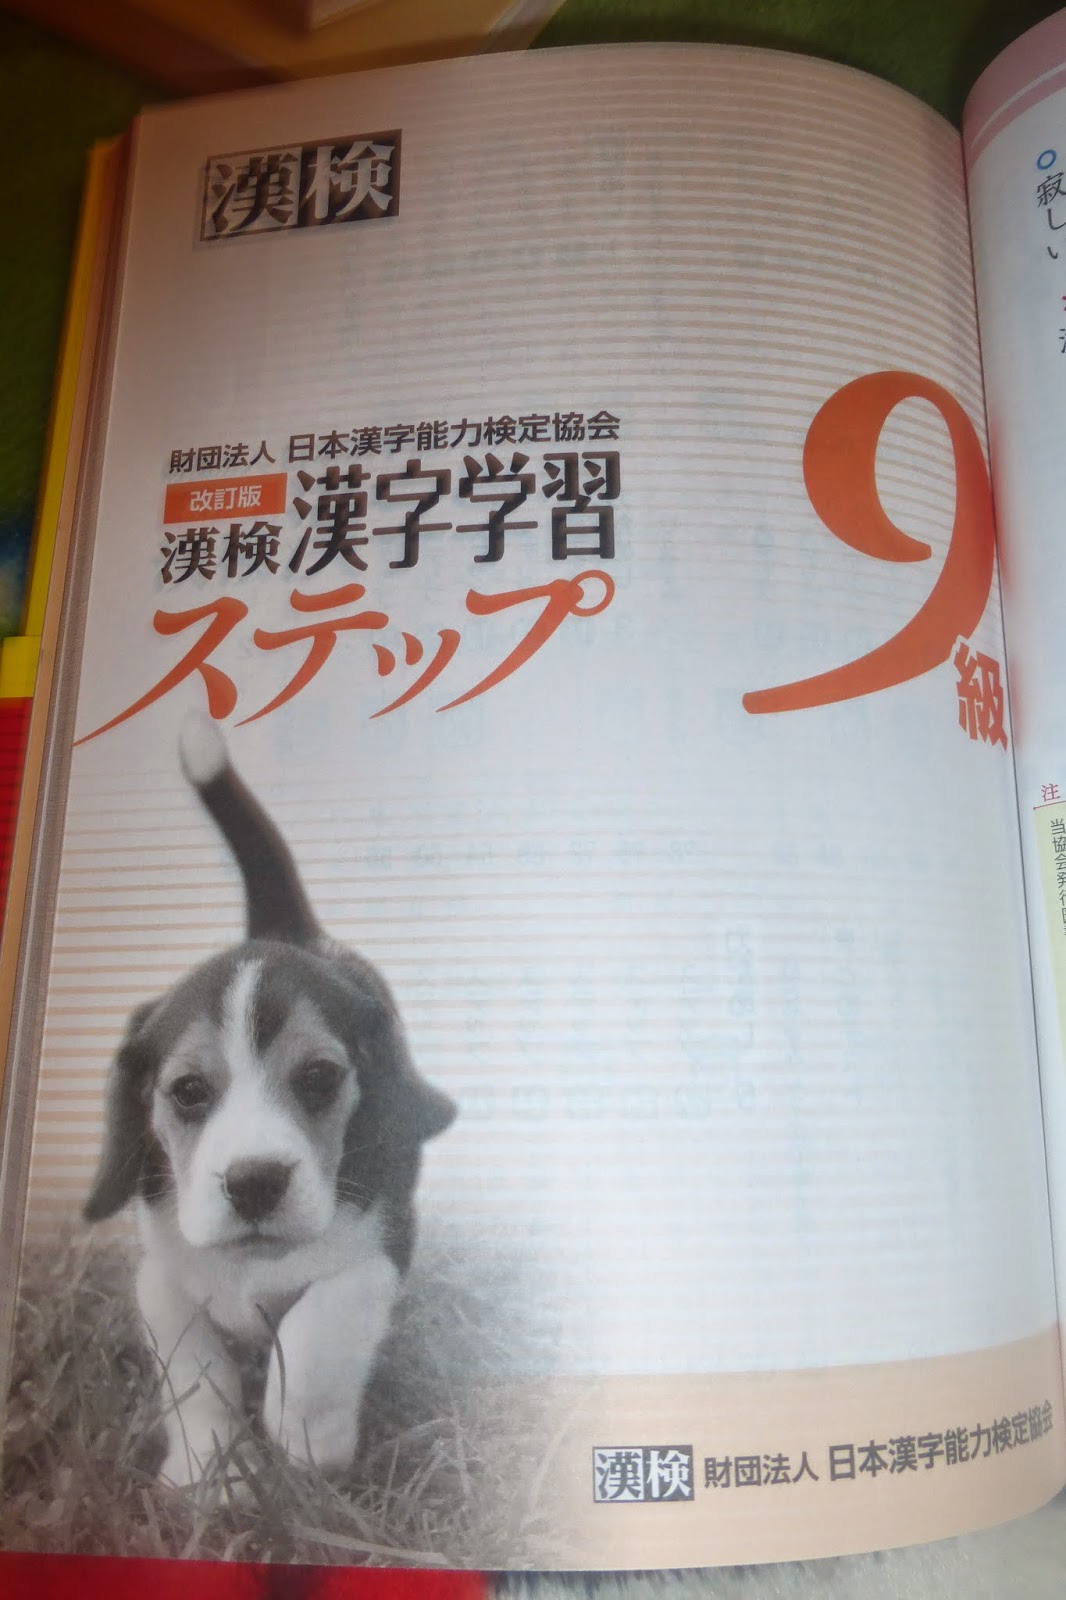 kanji gakushuu step pdf 76